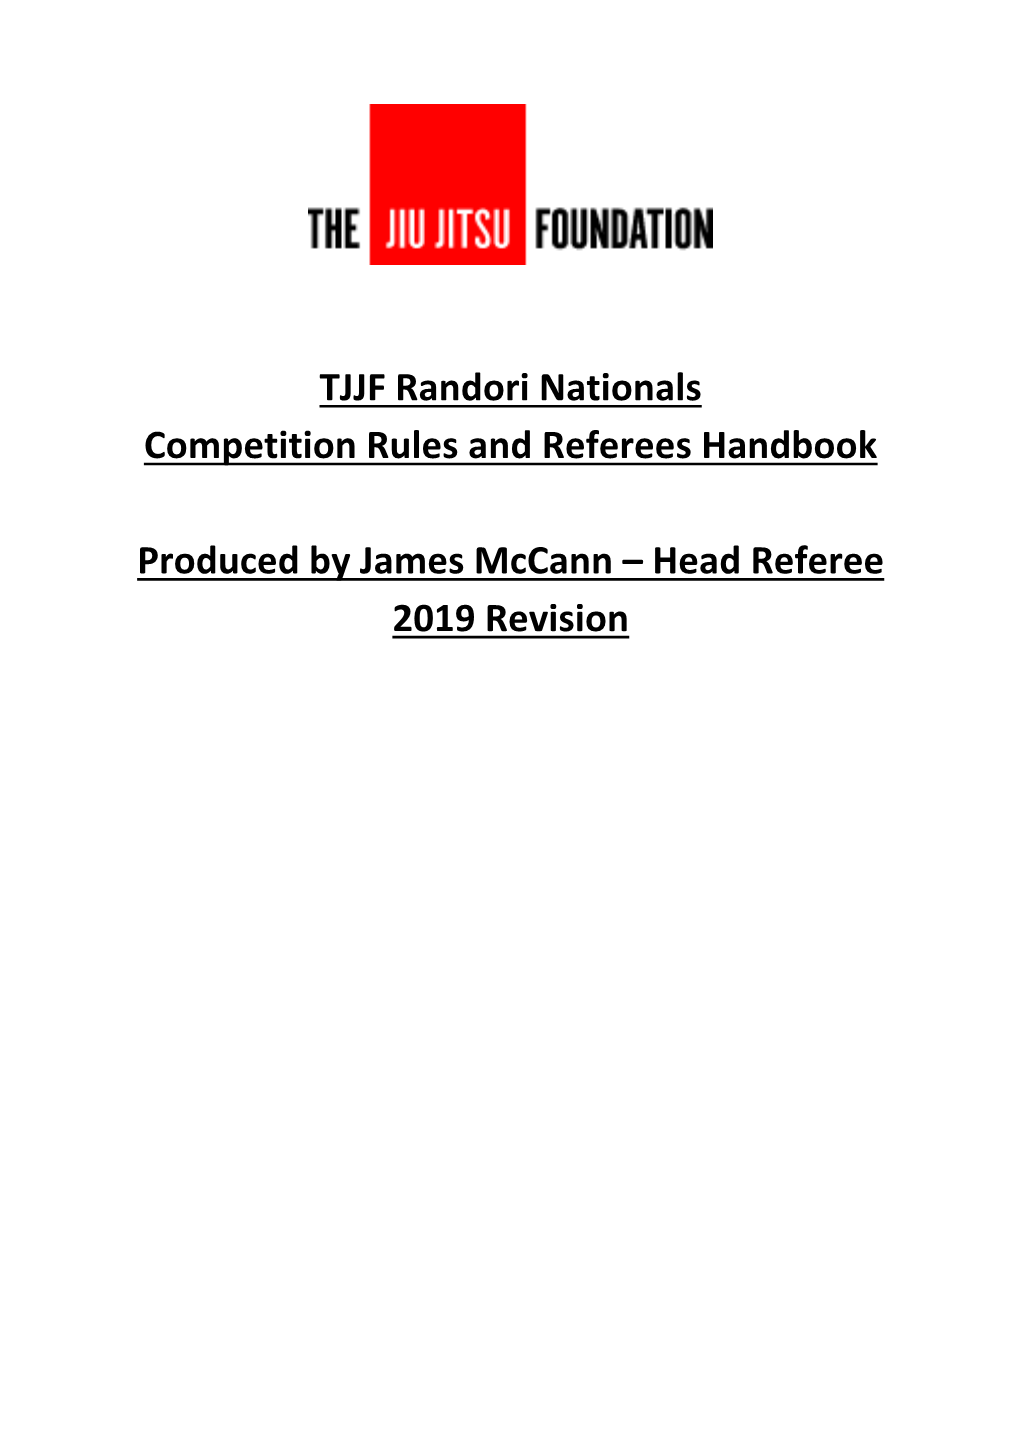 TJJF Randori Nationals Competition Rules and Referees Handbook